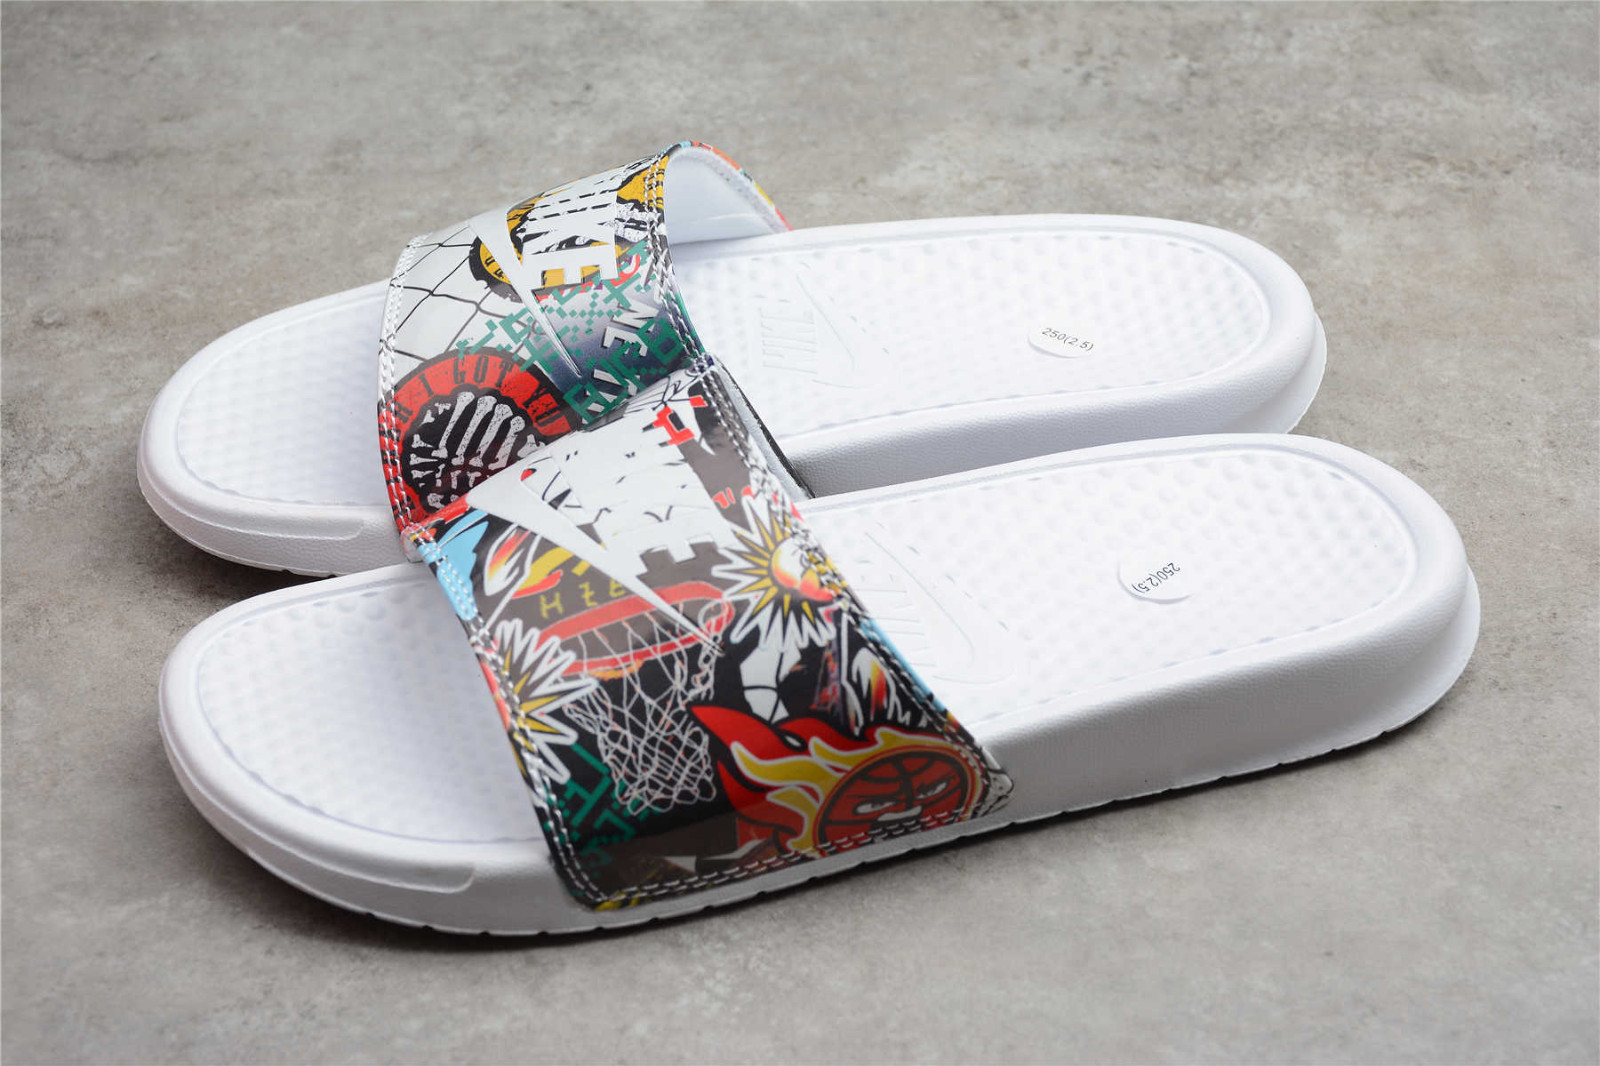 ankle boots 1 26841 37 antelope - GmarShops 01 - Nike Benassi Print Slides Blanc Shoes 819717